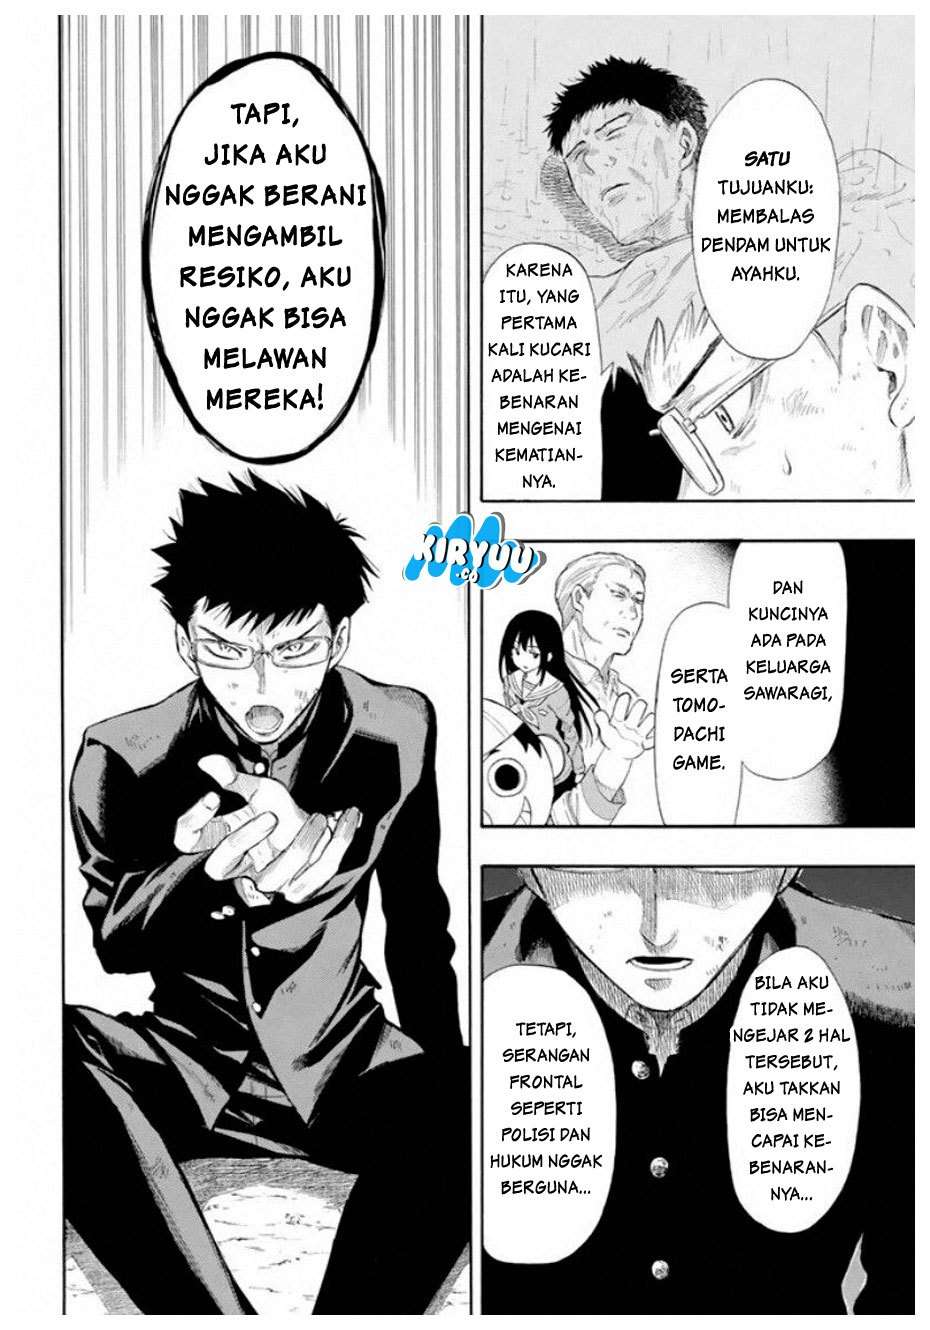 Tomodachi Game Chapter 13 Bahasa Indonesia